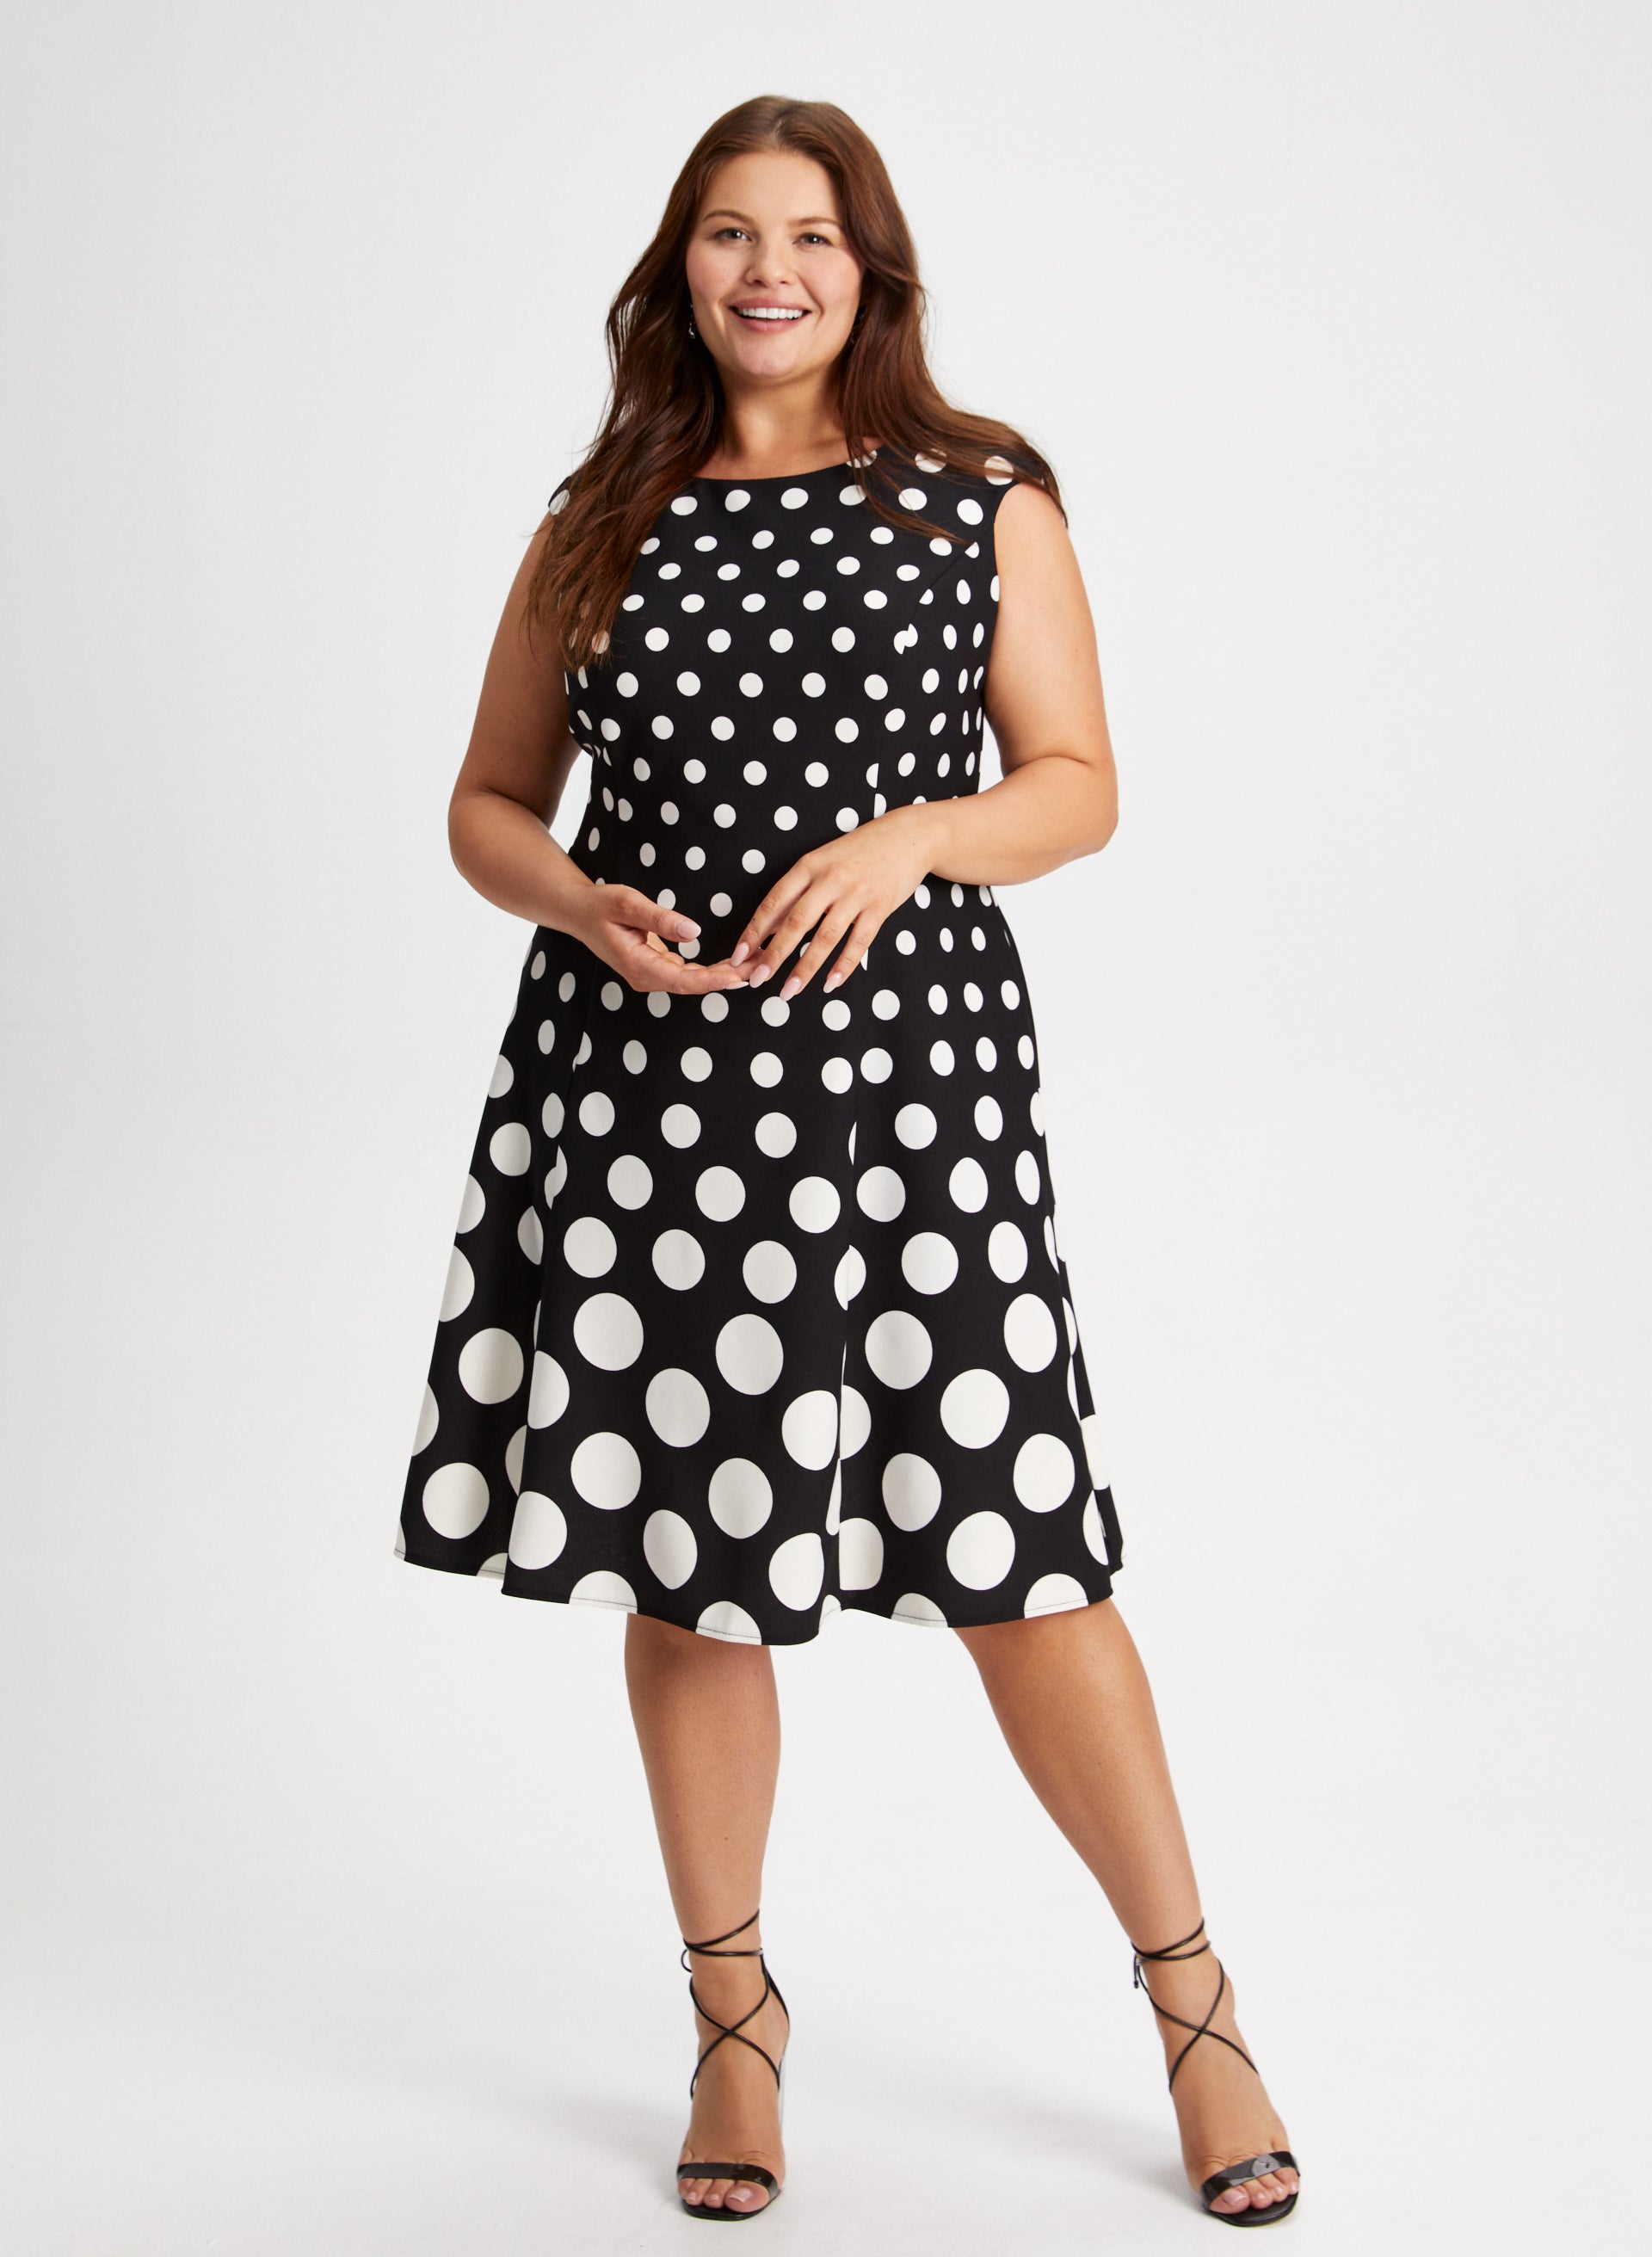 Polka Dots Dress, Cotton Clothing for Women, Plus Size Dress, A